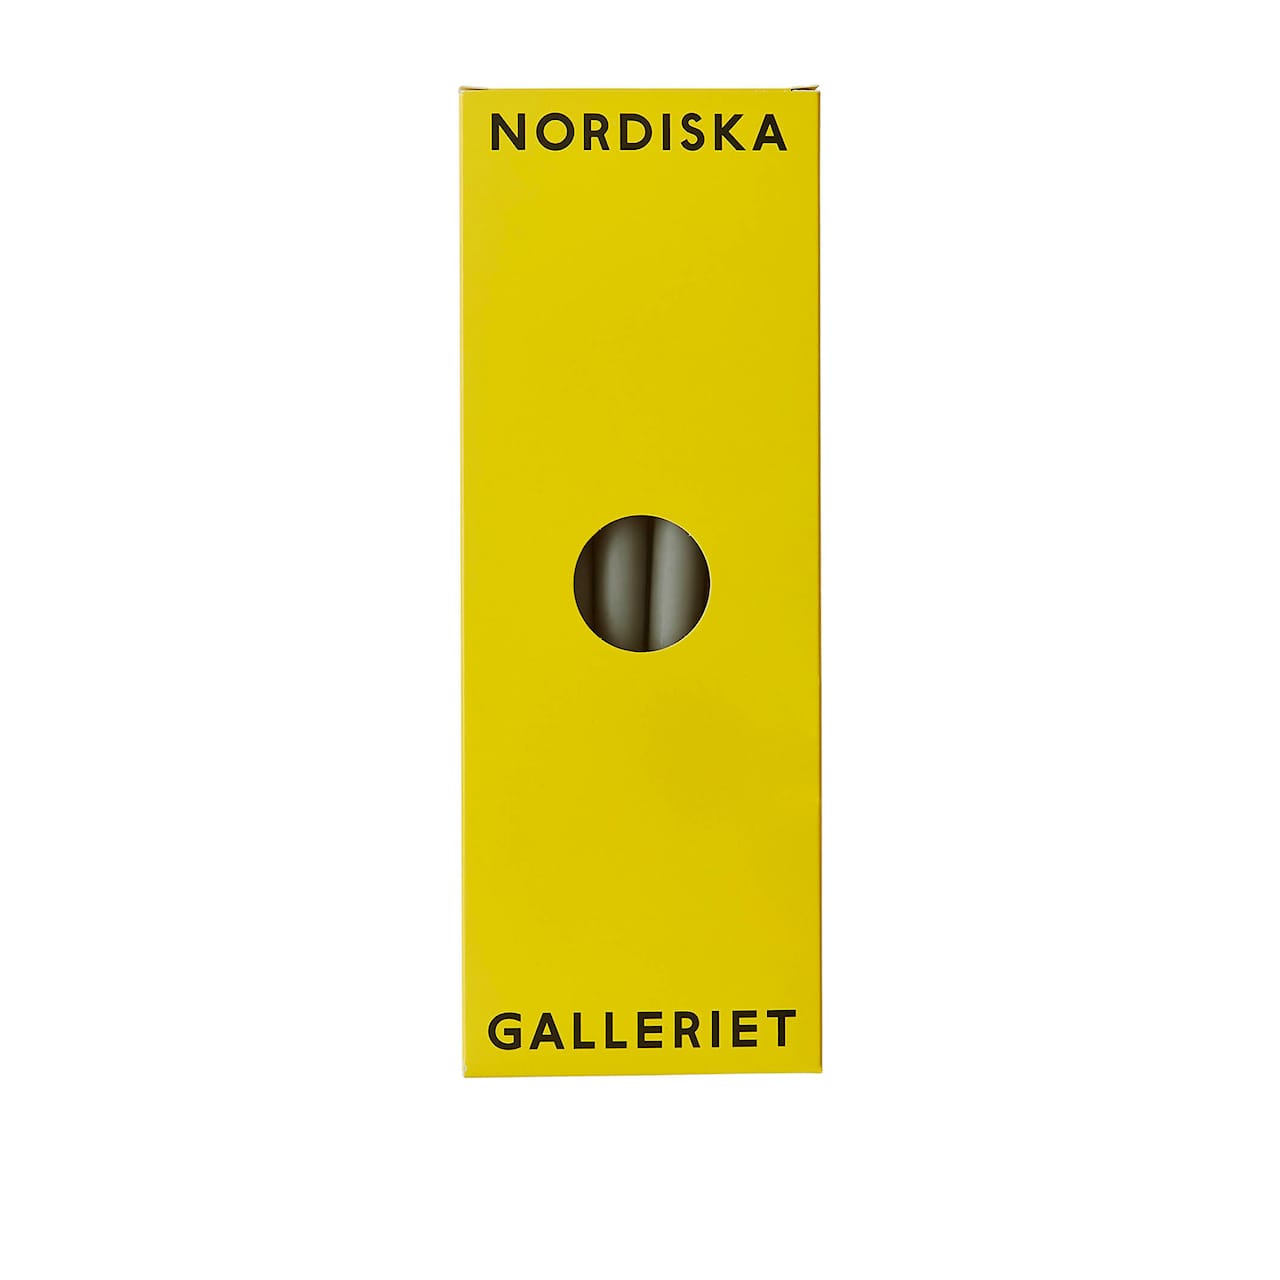 Nordiska Galleriet Candles Pack of 6 - Putty